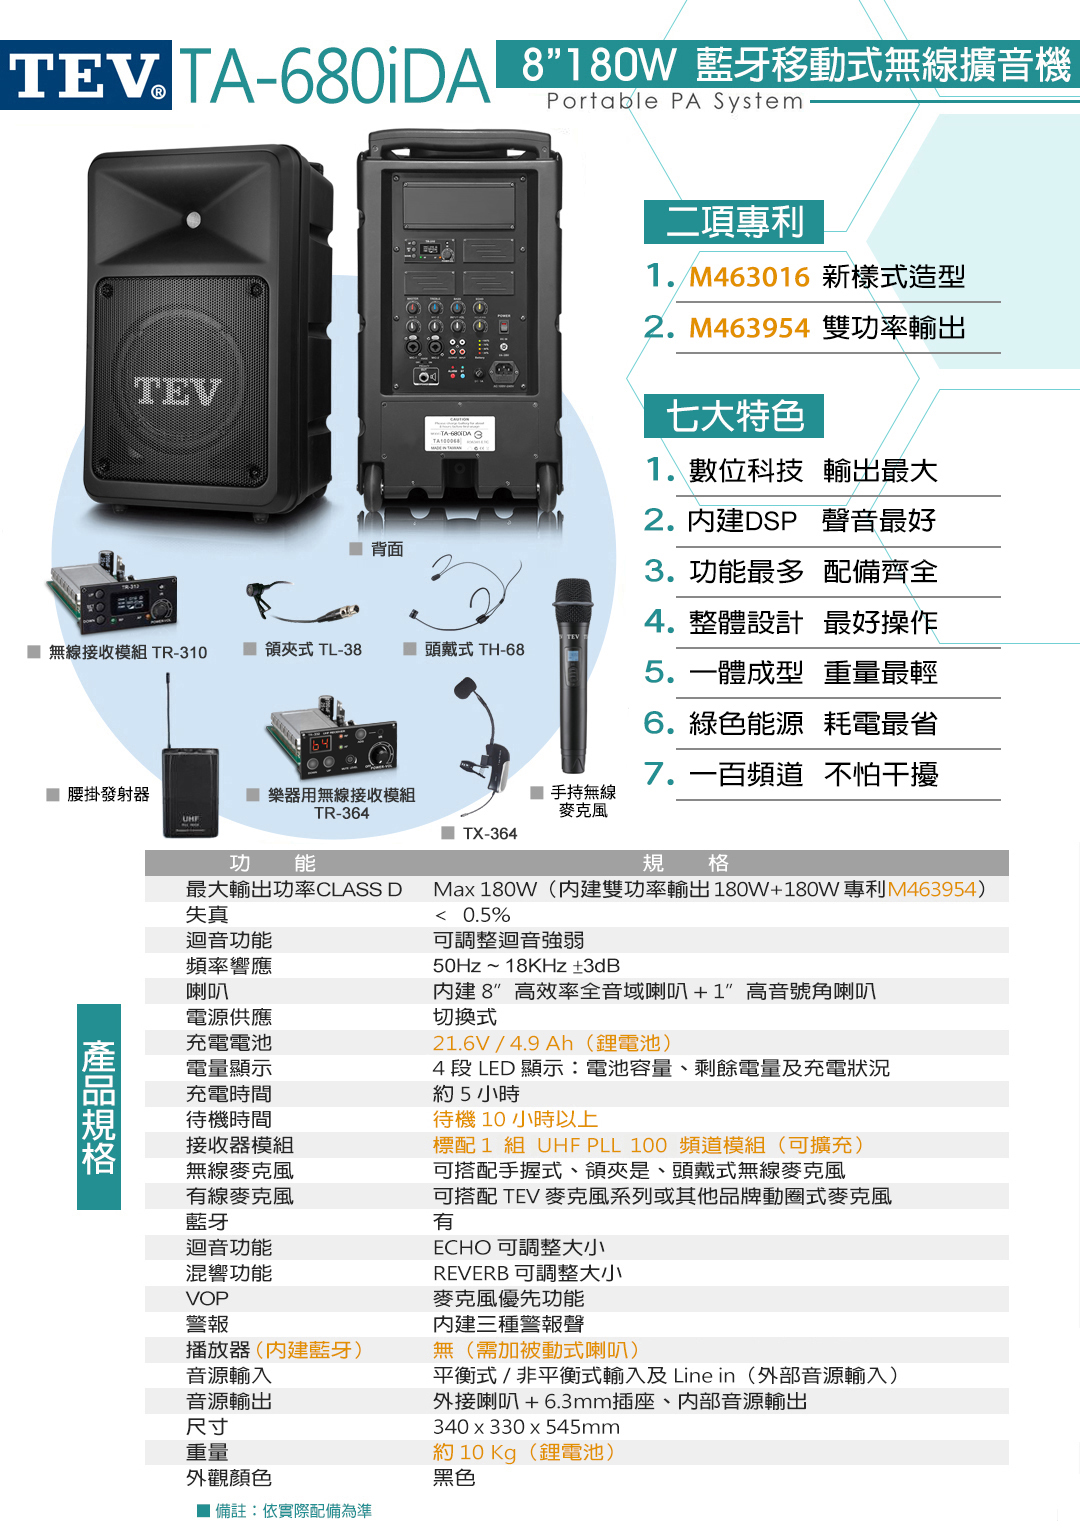 TA- 80W 藍牙移動式無線擴音機Portable PA SystemTEV二項專利1.M463016 新樣式造型2. M463954 雙功率輸出七大特色1.數位科技 輸出最大2.DSP 聲音最好 背面3.功最多 配備齊全4.整體設計 最好操作 無線接收模組 TR-310  式 TL-38 頭戴式 TH-685.一體成型 重量最輕6.綠色能源 耗電最省7.一百頻道 不怕干擾TB-300 樂器用無線接收模組TR-364TM-8100TX-364功能最大輸出功率CLASS D失真迴音功能頻率響應喇叭電源供應充電電池電量顯示充電時間待機時間接收器模組無線麥克風有線麥克風藍牙迴音功能混響功能VOP警報播放器(內建藍牙)音源輸入音源輸出規格Max 180W(內建雙功率輸出180W+180W專利M463954) 0.5%可調整迴音強弱50Hz~18KHz±3dB內建8高效率全音域喇叭+1高音號角喇叭切換式11.1V/5200mAh(電池)x24 段 LED 顯示:電池容量、剩餘電量及充電狀況約5小時待機10小時以上標配1 組 UHF PLL 100 頻道模組(可擴充)可搭配手握式、領夾是、頭戴式無線麥克風可搭配 TEV 麥克風系列或其他品牌動圈式麥克風有ECHO 可調整大小REVERB 可調整大小麥克風優先功能内建三種警報聲無(需加被動式喇叭)平衡式/非平衡式輸入及 Line in (外部音源輸入)外接喇叭+6.3mm插座、内部音源輸出340 x 330 x 545mm尺寸重量約11 (鋰電池)外觀顏色黑色 備註:依實際配備為準